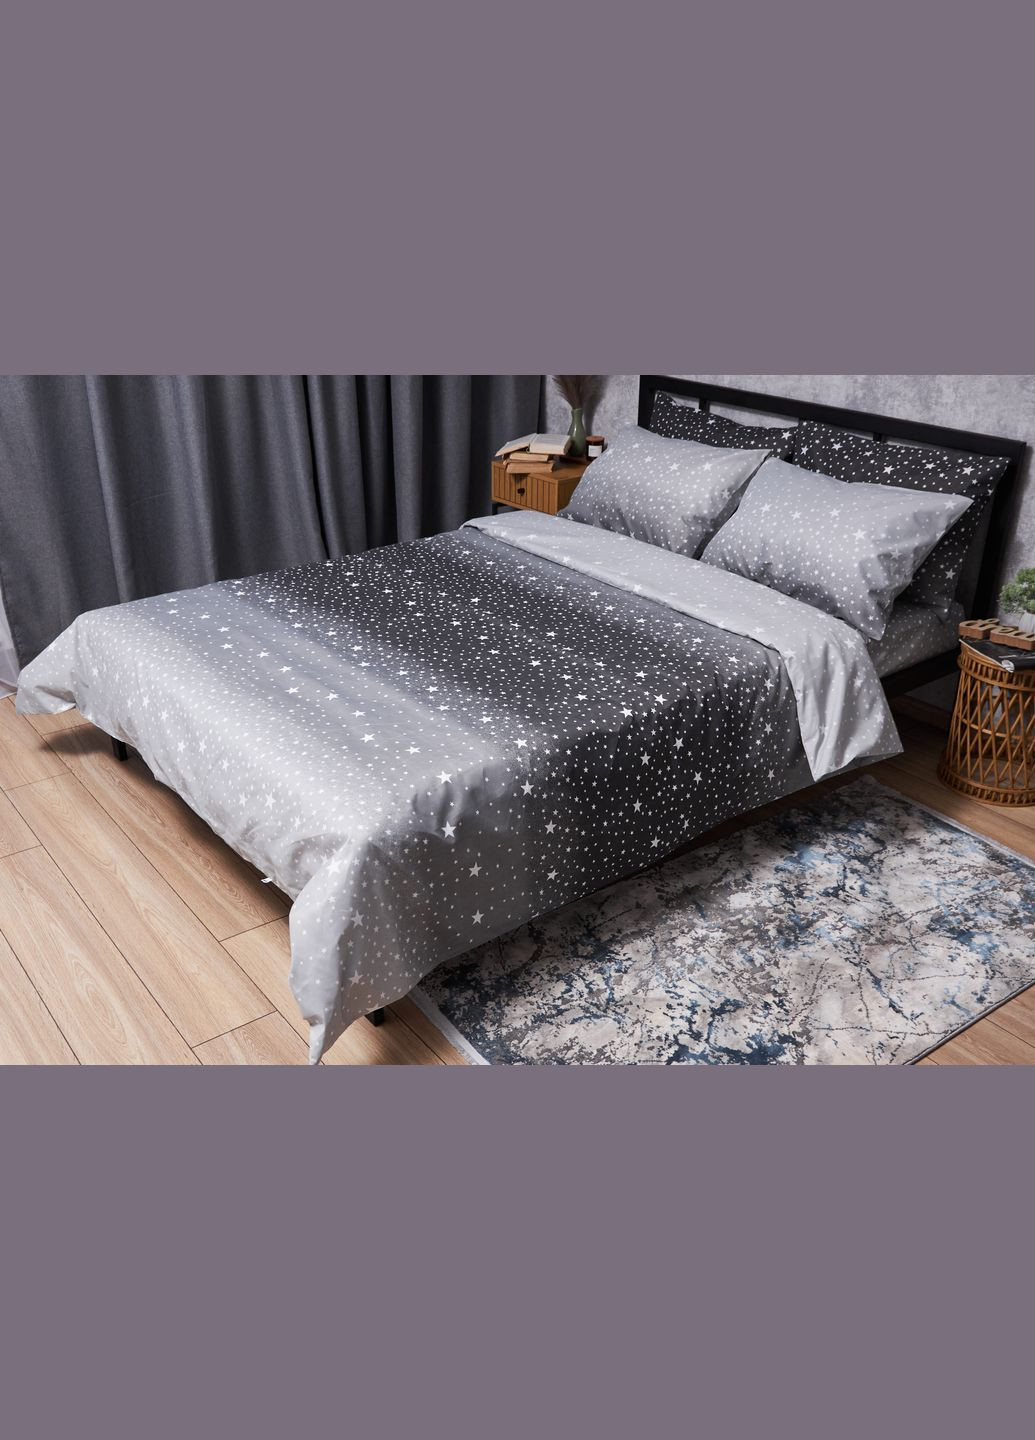 Комплект постельного белья Микросатин Premium «» полуторный евро 160х220 наволочки 2х40х60 (MS-820005130) Moon&Star starry night (293147812)